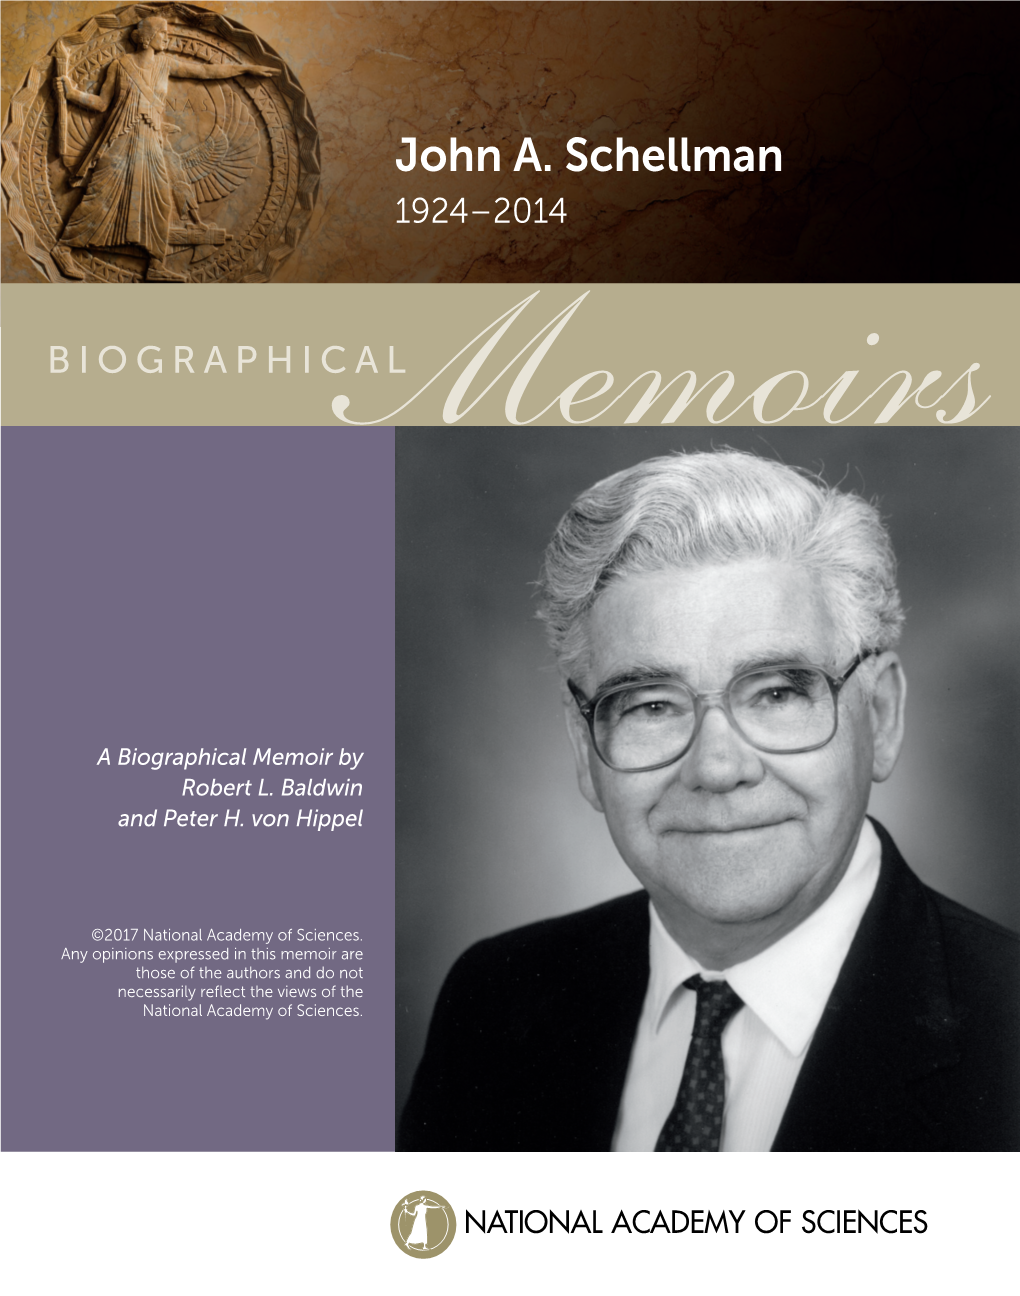 John Schellman Was Born Into a Working Class Family in Philadelphia on October 24, 1924